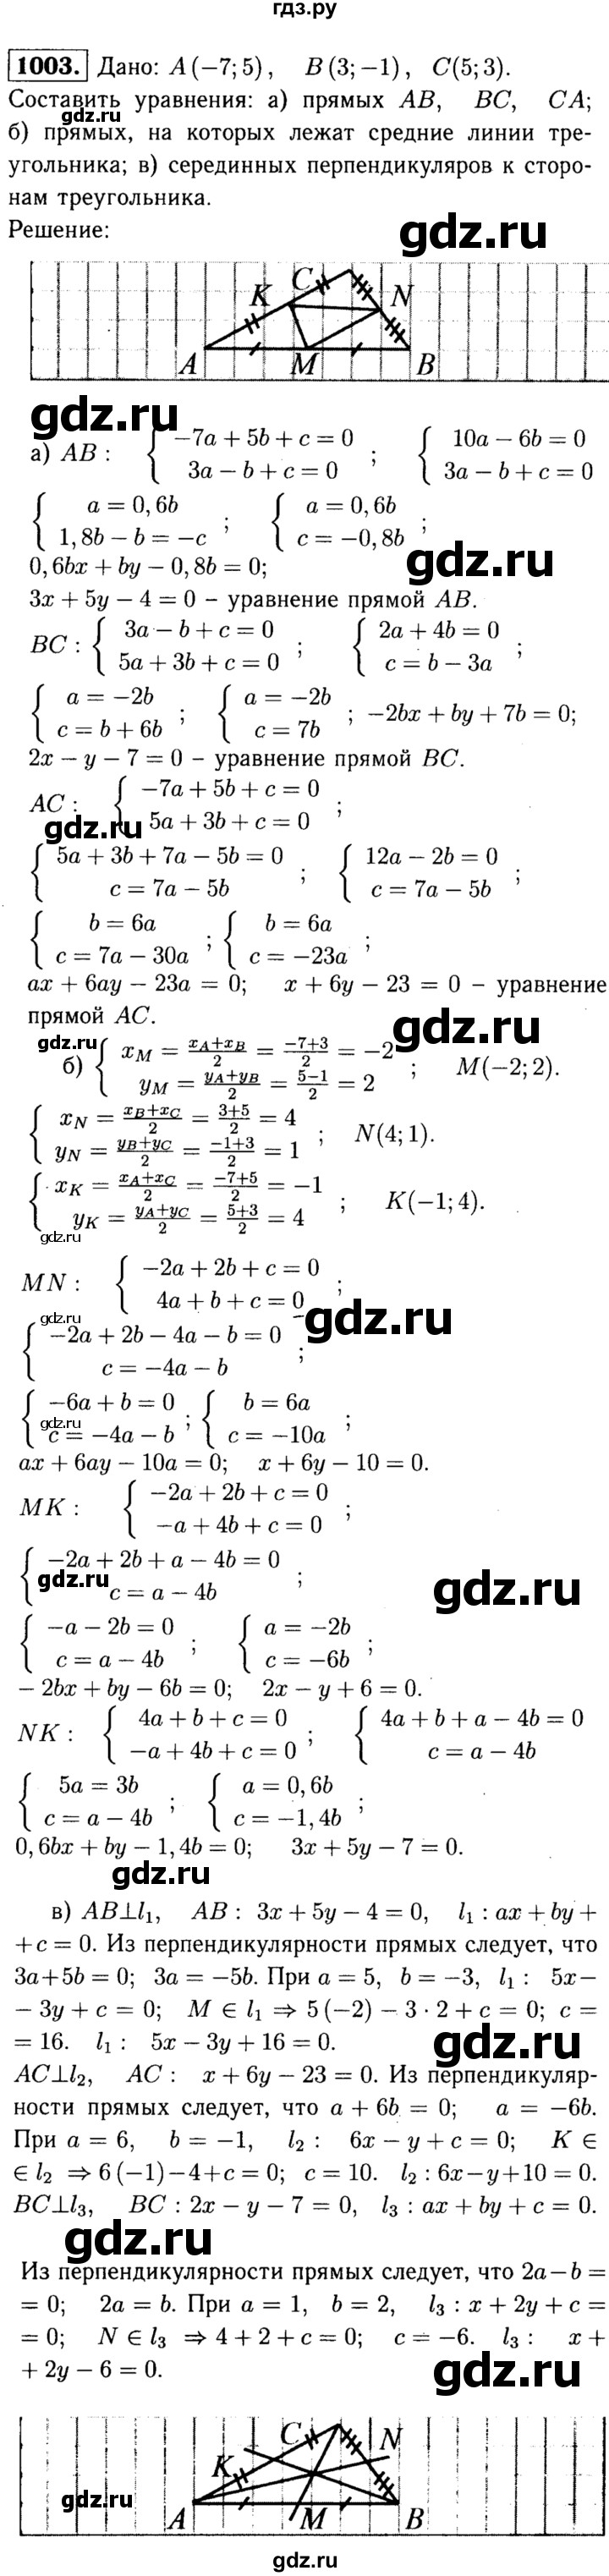 ГДЗ по геометрии 7‐9 класс  Атанасян   глава 10. задача - 1003, Решебник №2 к учебнику 2016